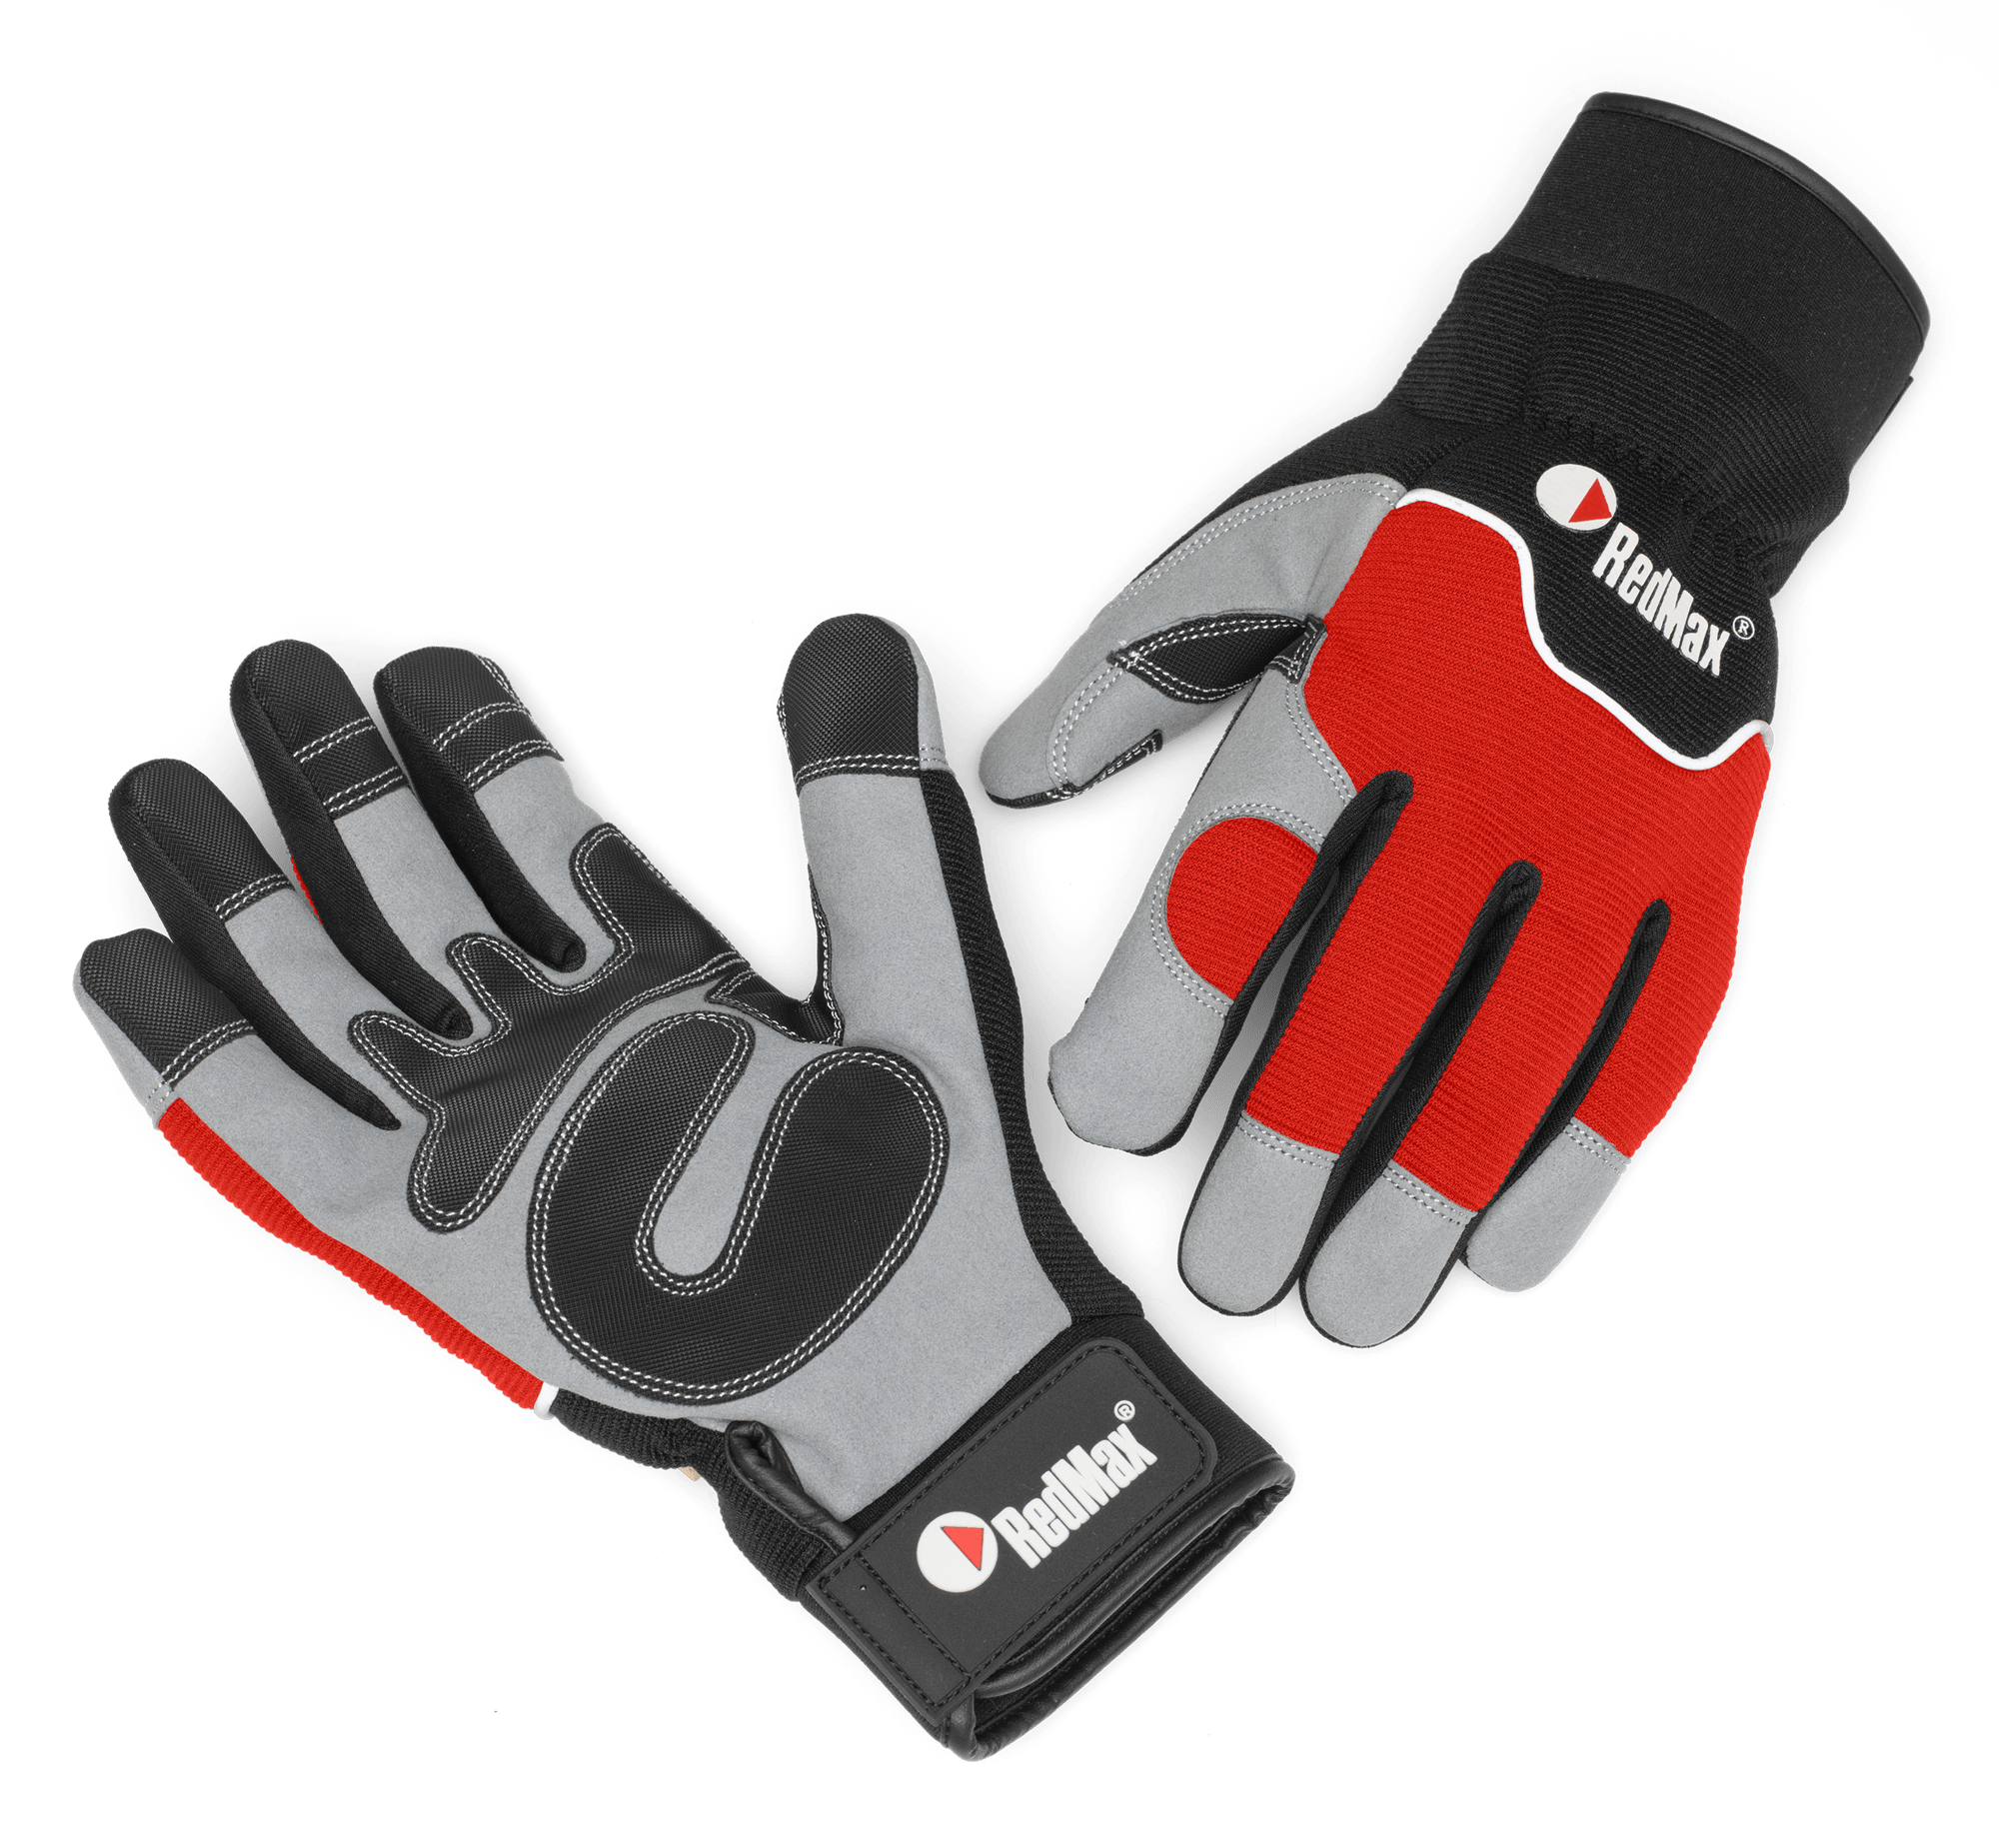 RedMax gloves